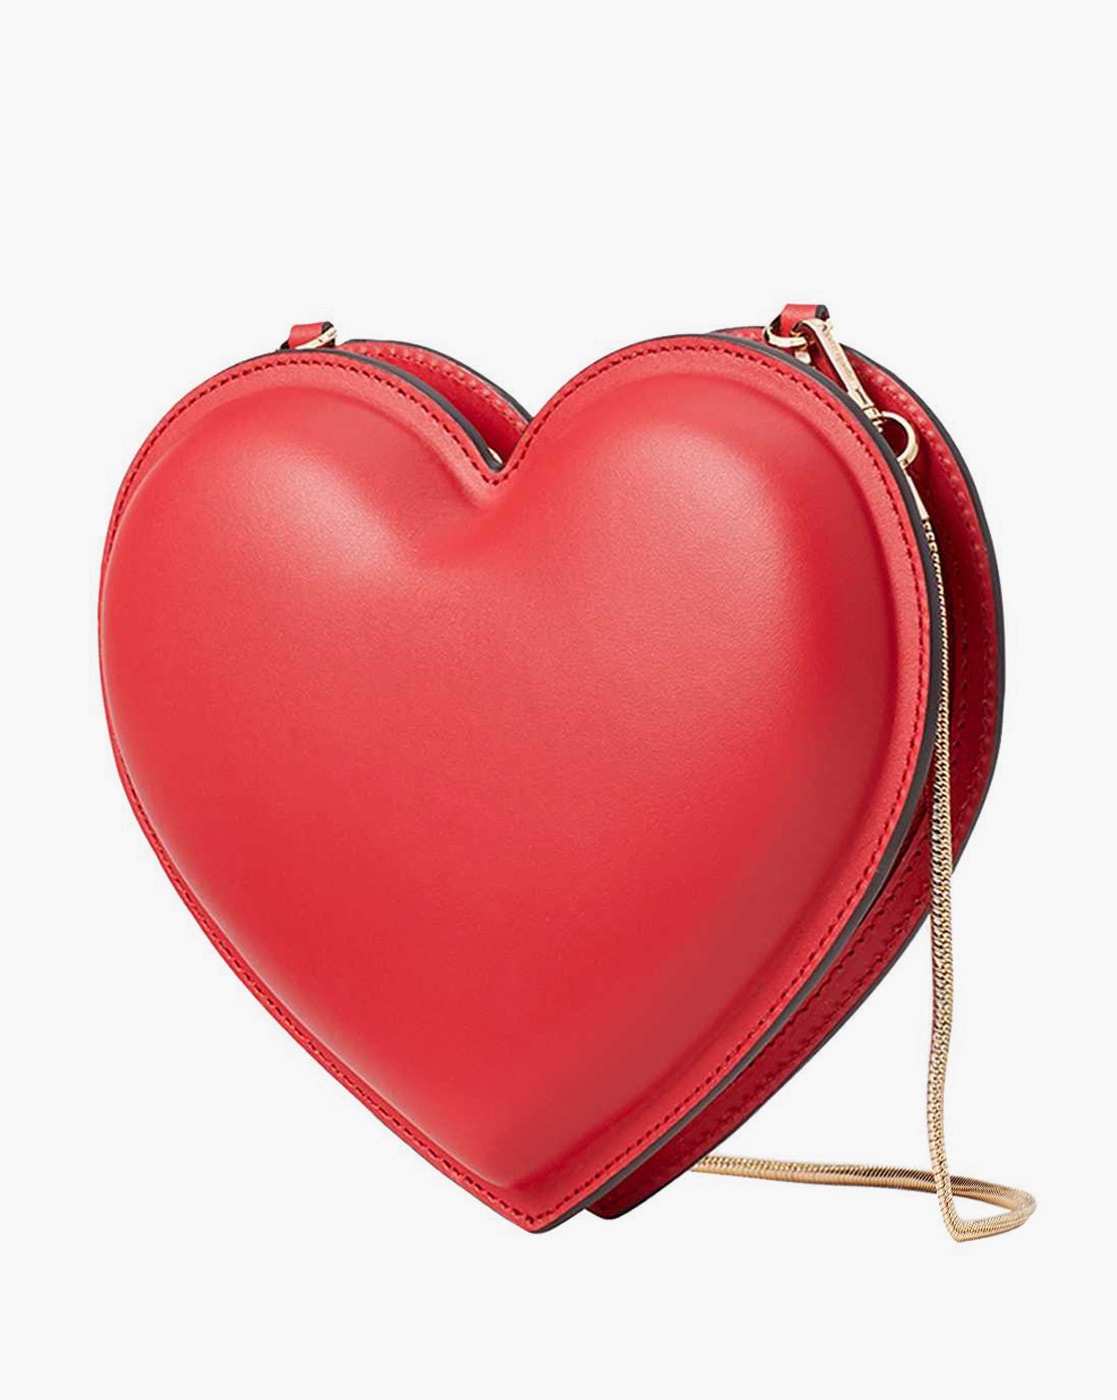 Comparison of the @coach @katespade #heart#bag 🥰 #coach#valentinesday, kate  spade heart purse